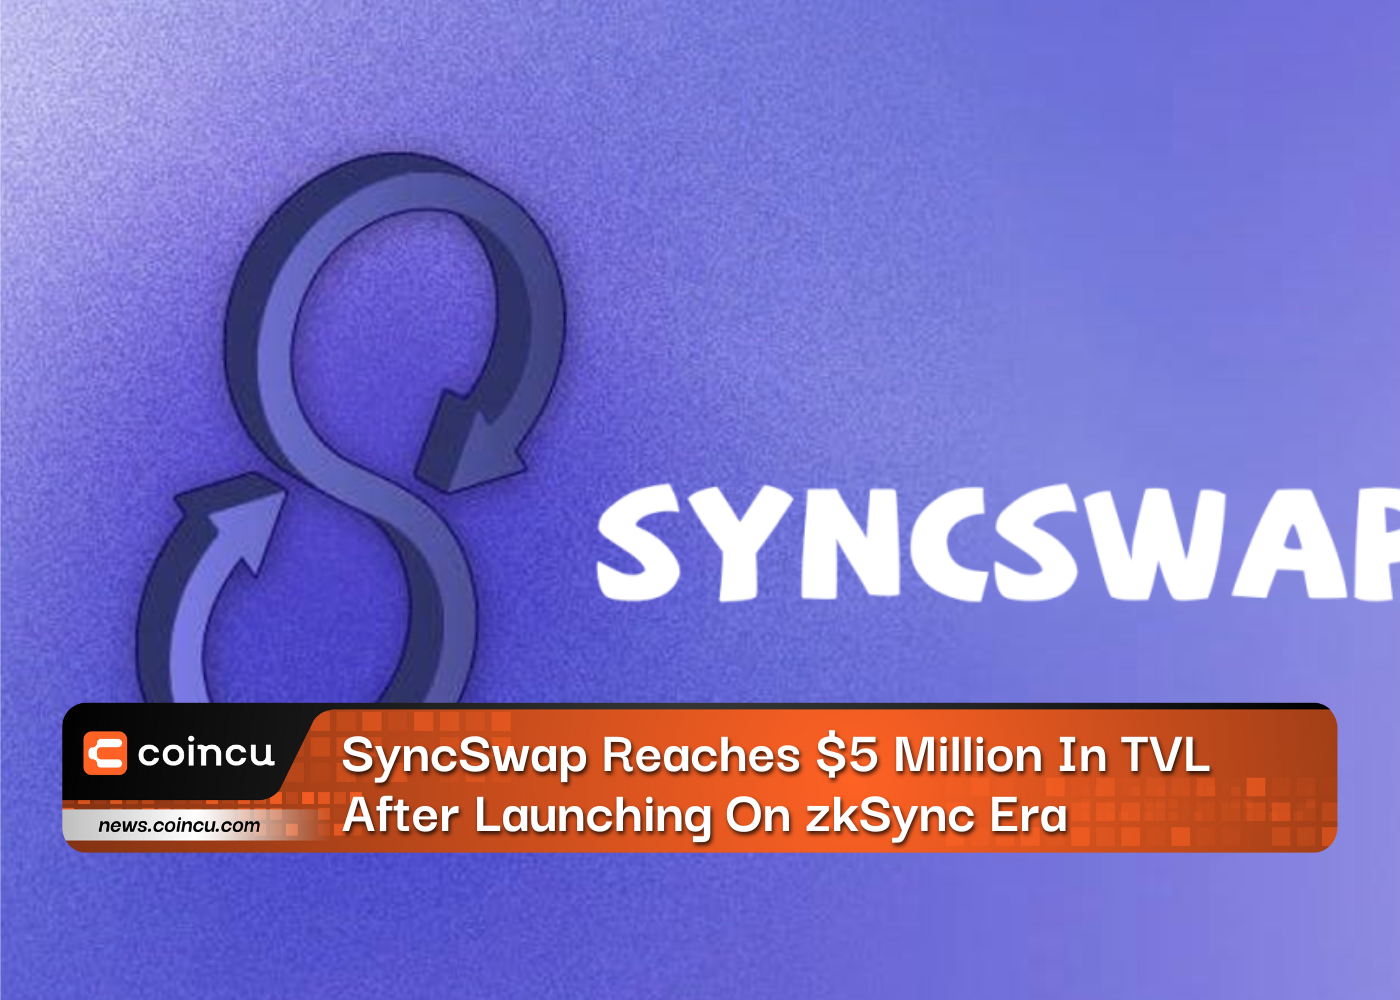 SyncSwap Reaches $5 Million In TVL After Launching On zkSync Era